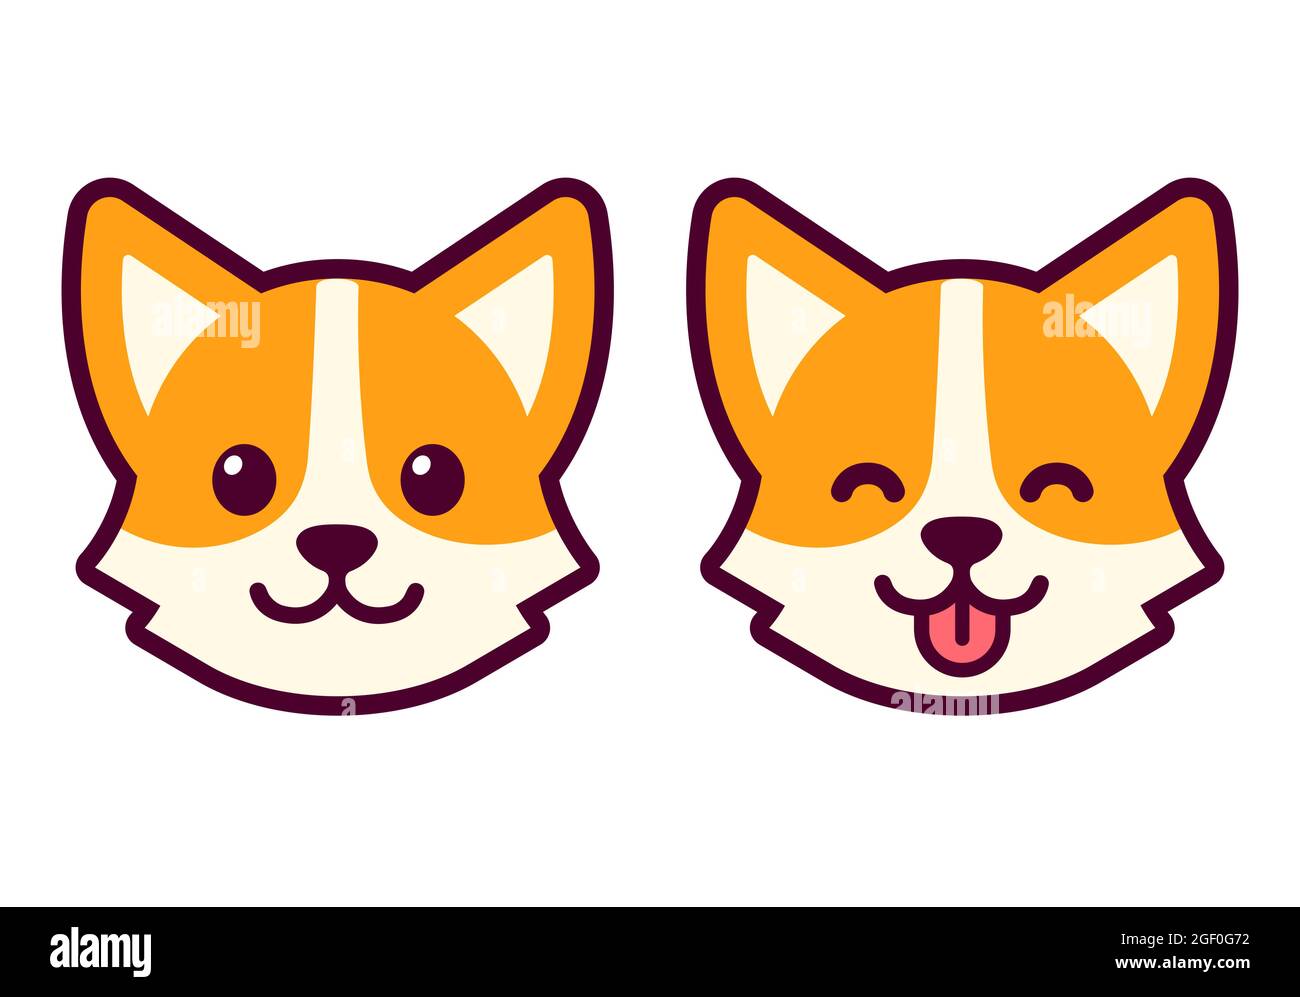 Cute cartoon corgi face drawing, normal and tongue out. Cute dog head icon, vector illustration set. Stock Vector